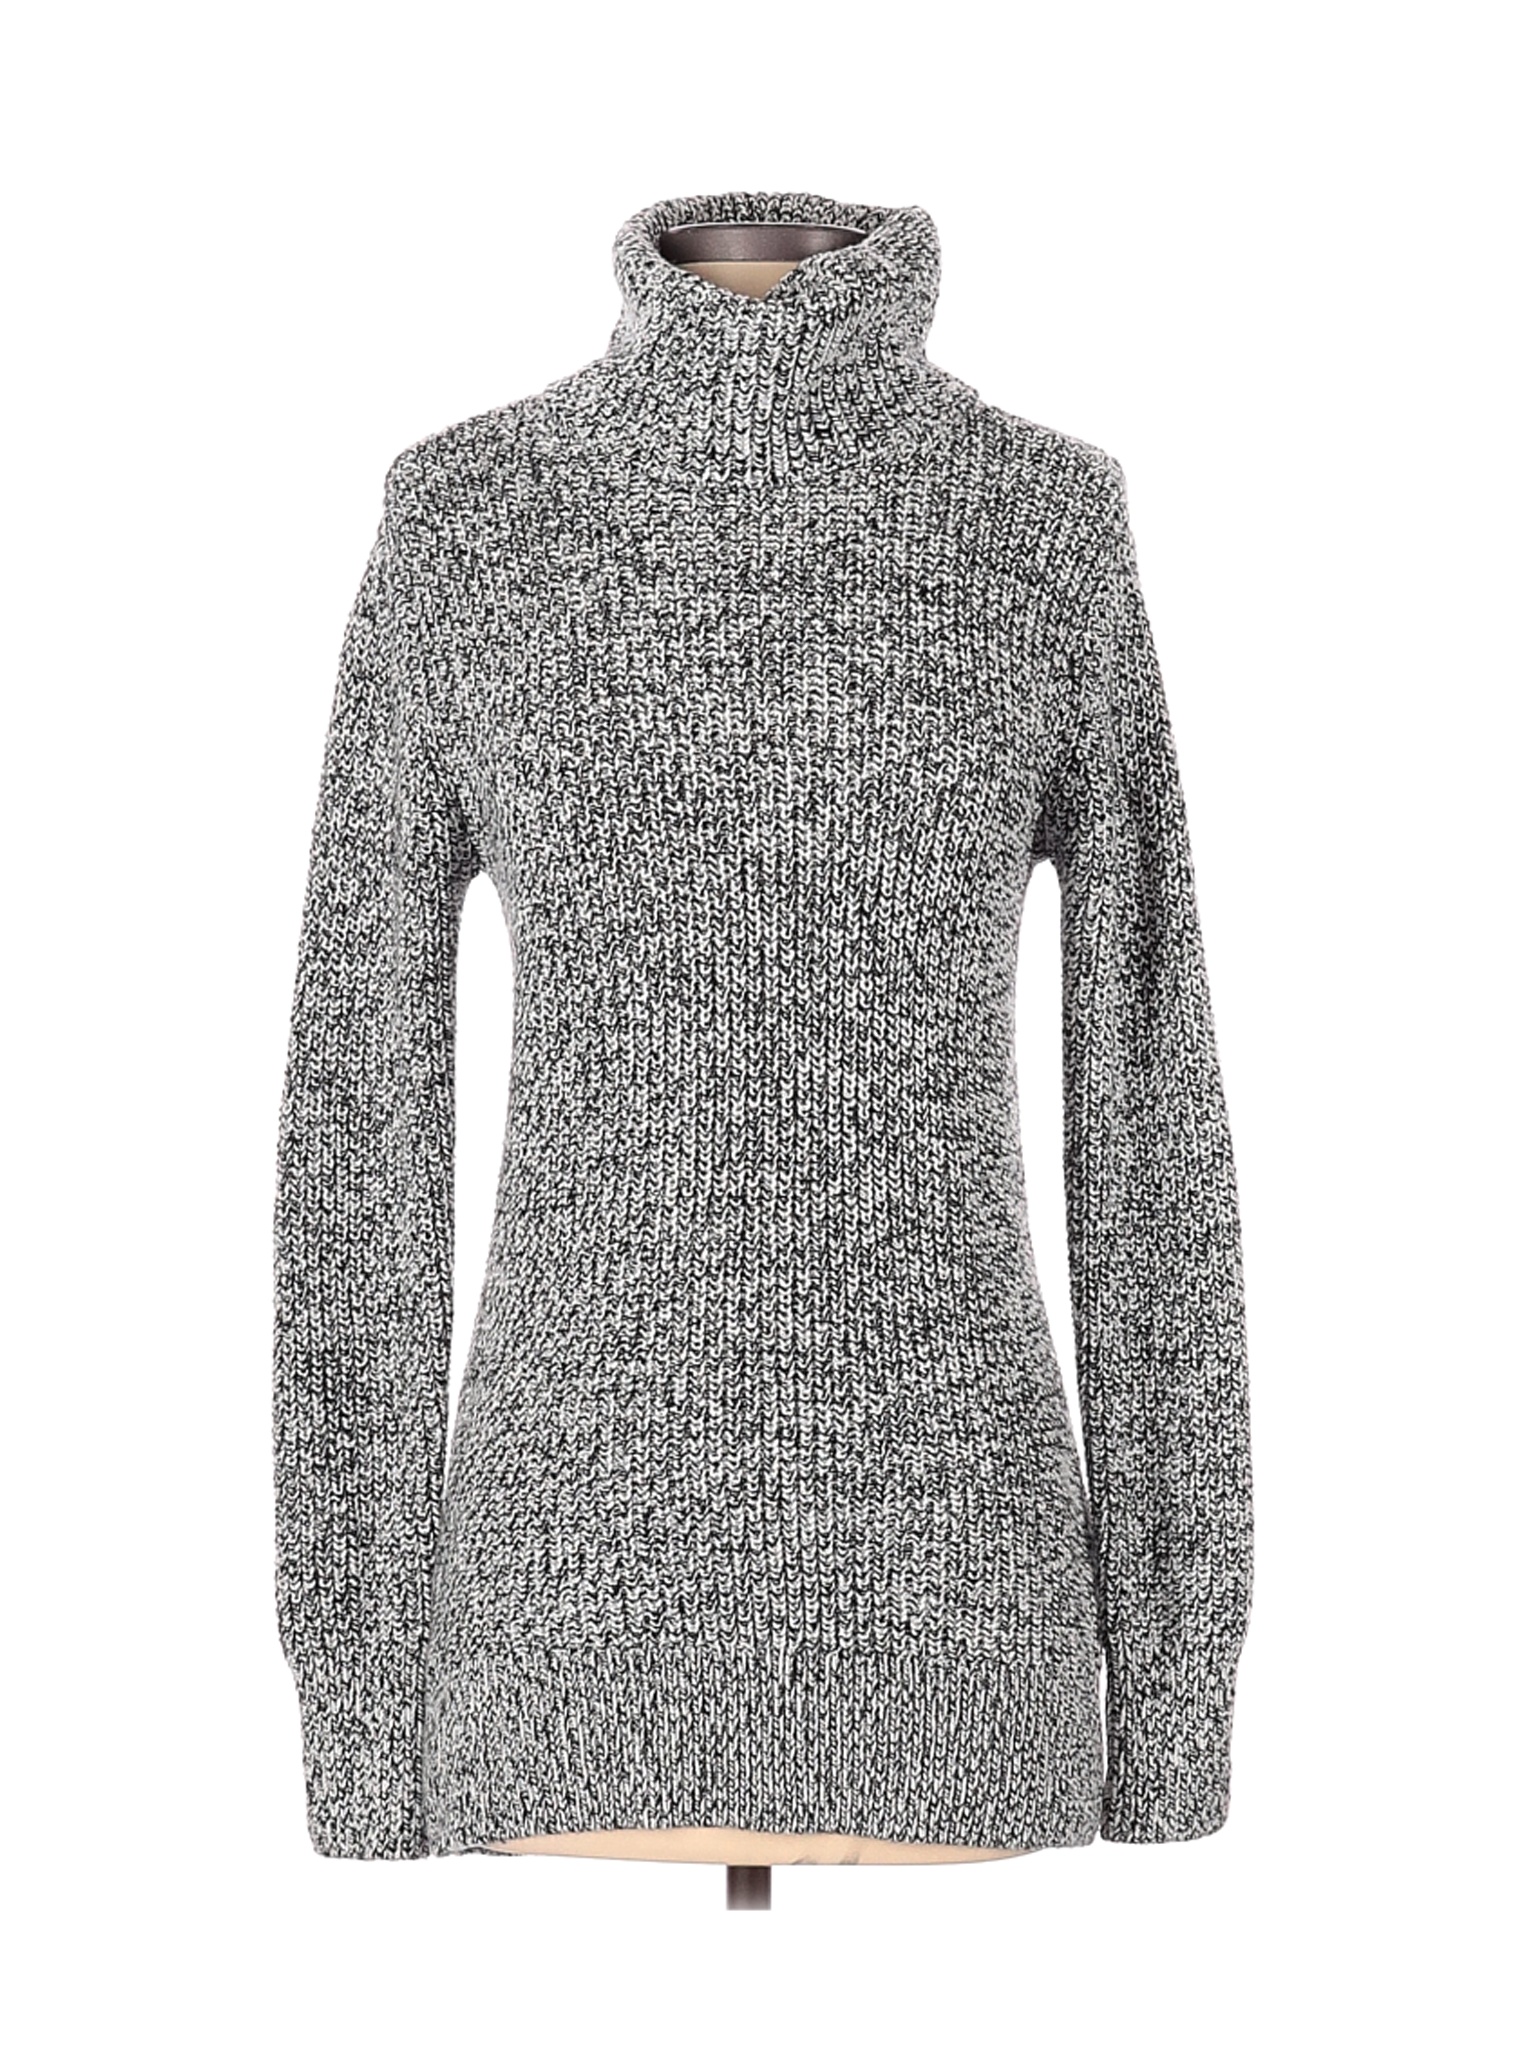 Abercrombie & Fitch Women Gray Turtleneck Sweater XS | eBay